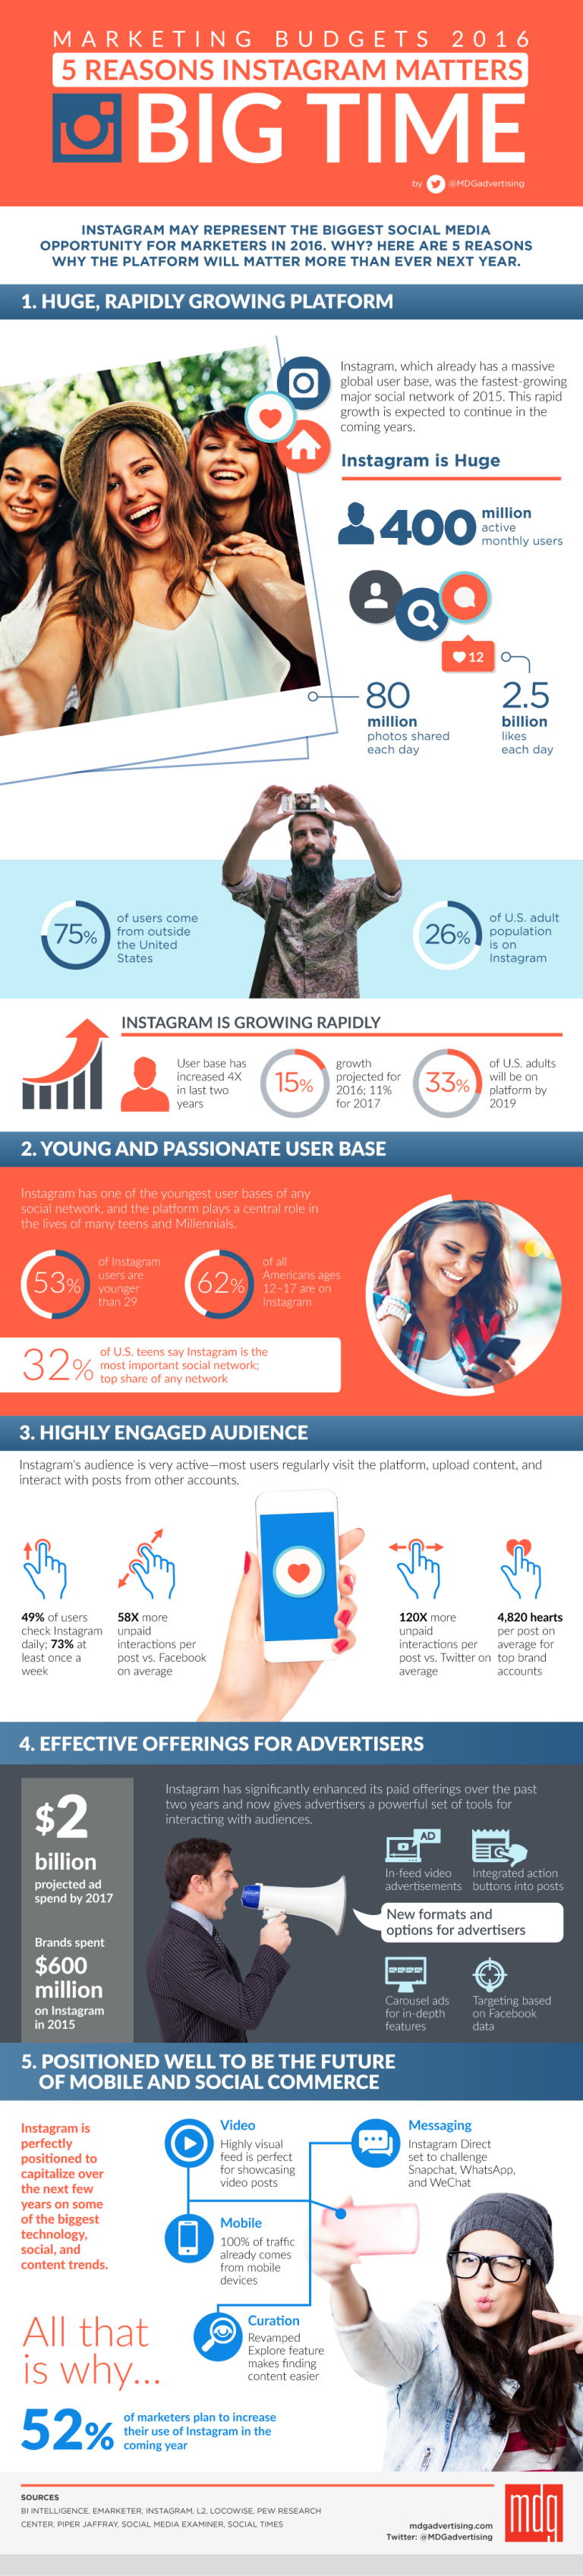 instagram-marketing-budgets-2016-infographic-1000px